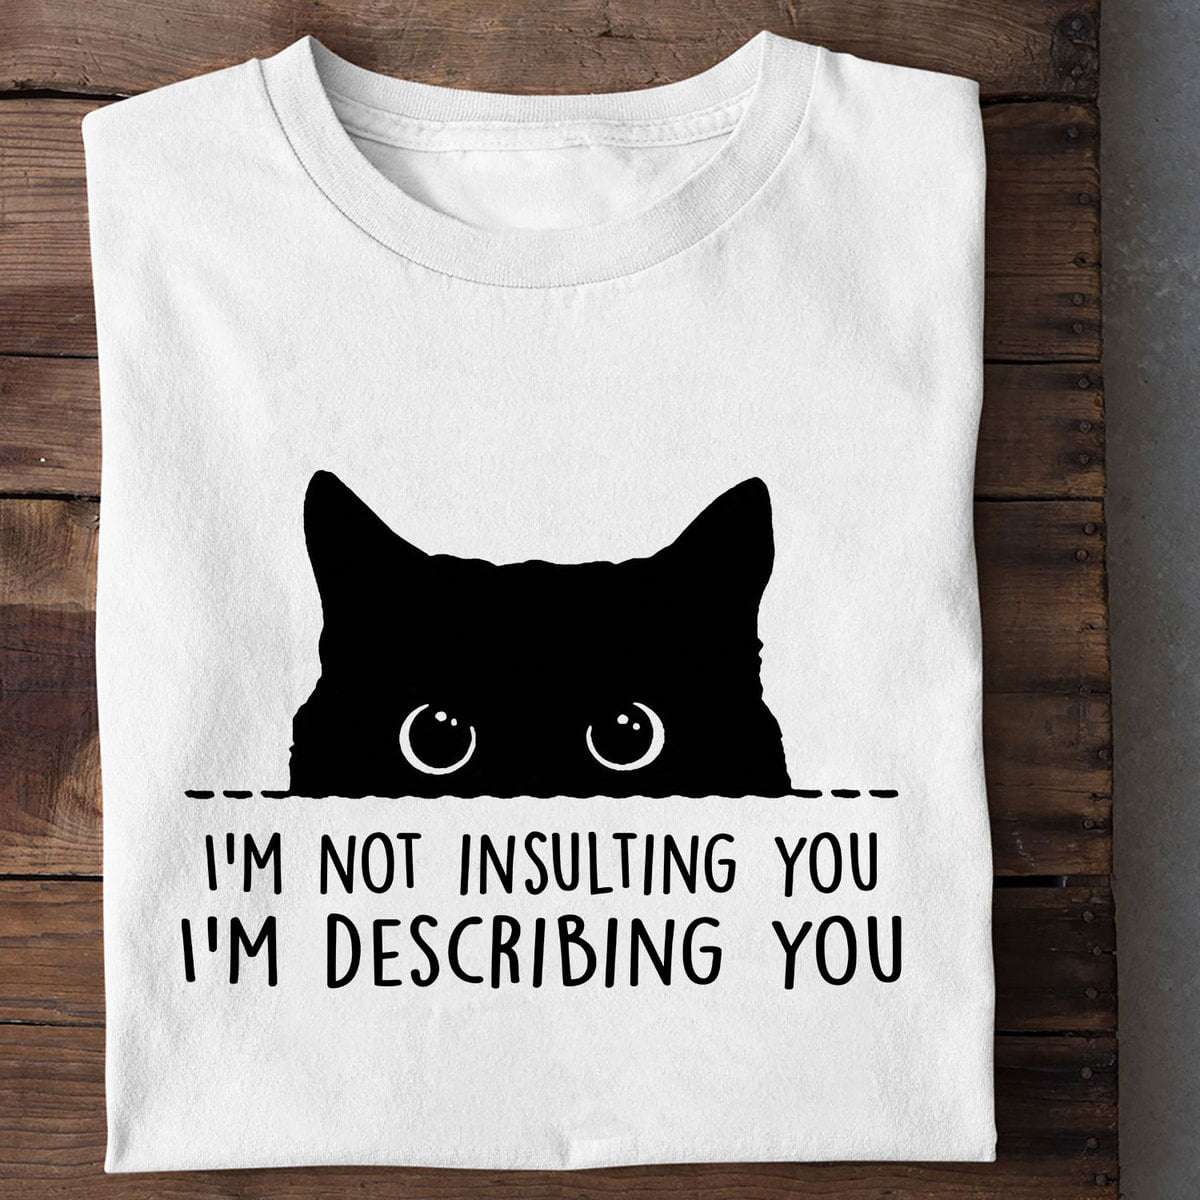 I'm not insulting you I'm describing you - Black cat staring, black cat big eyeball